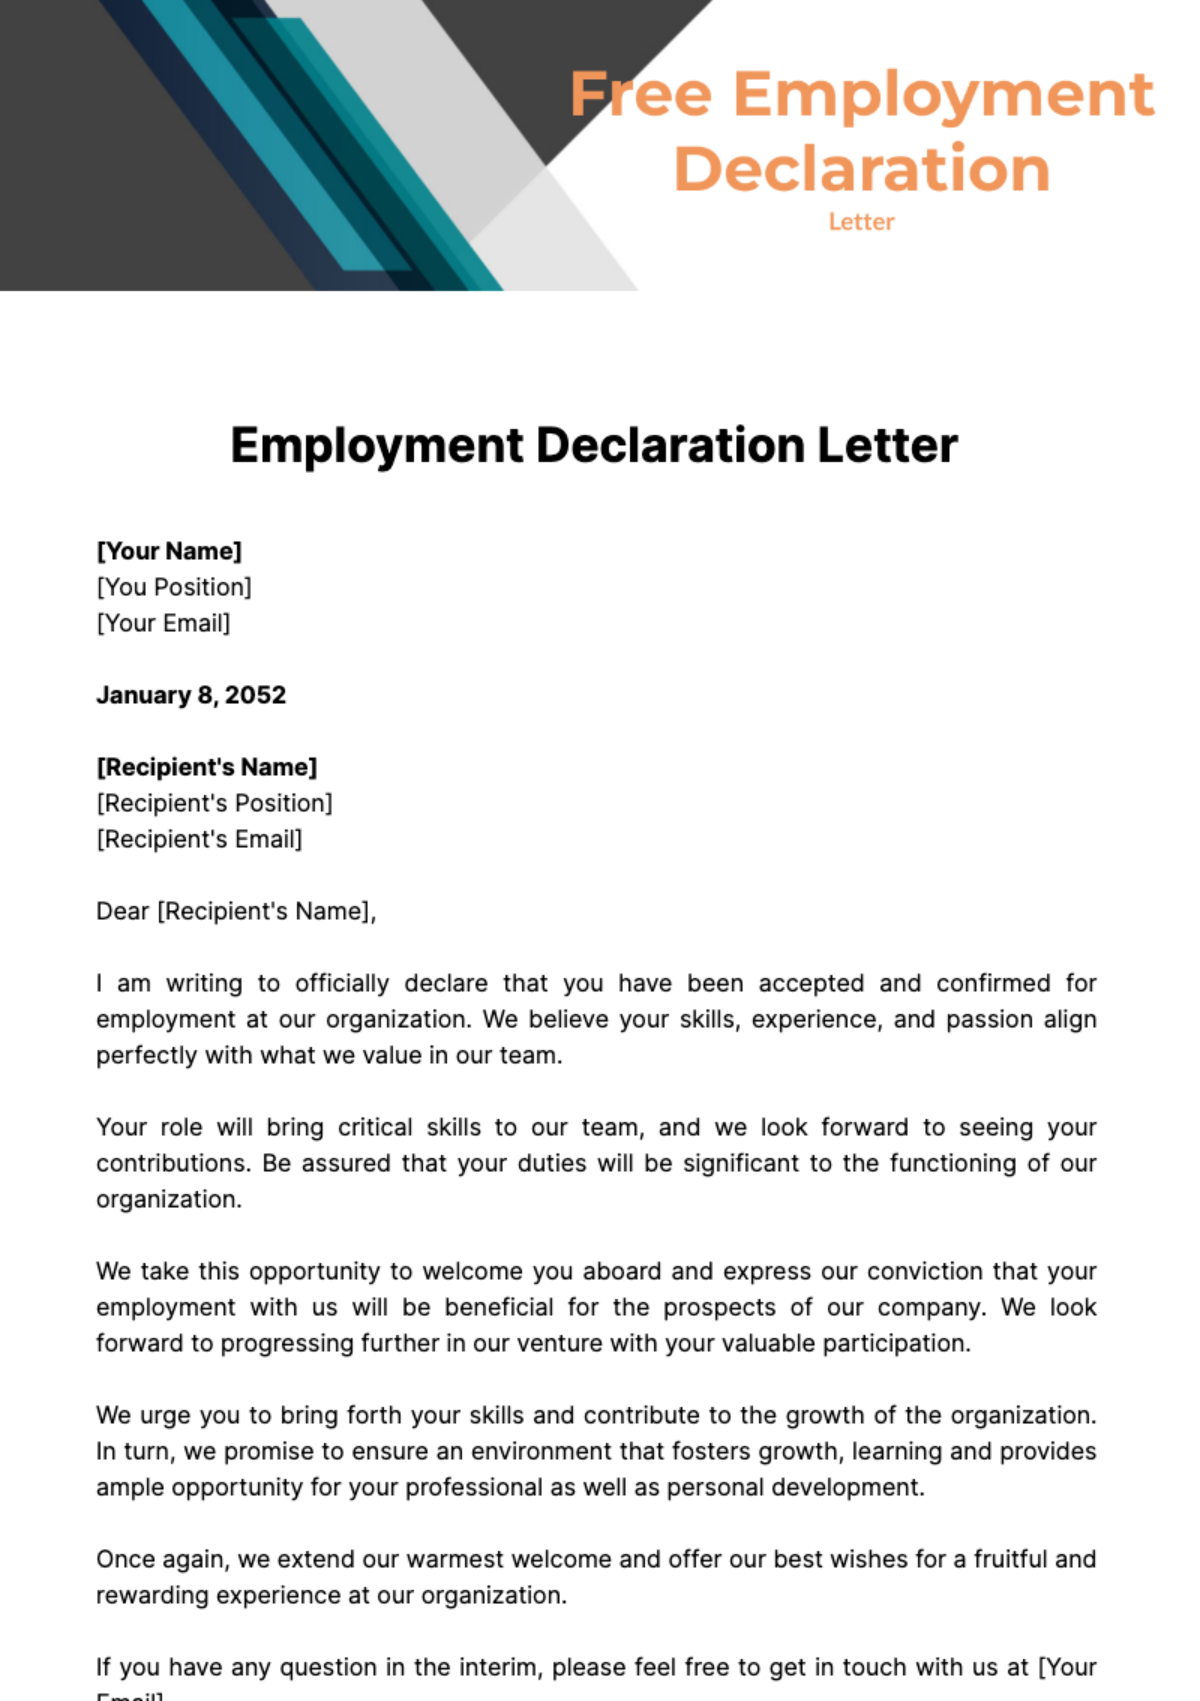 Free Employment Declaration Letter Template